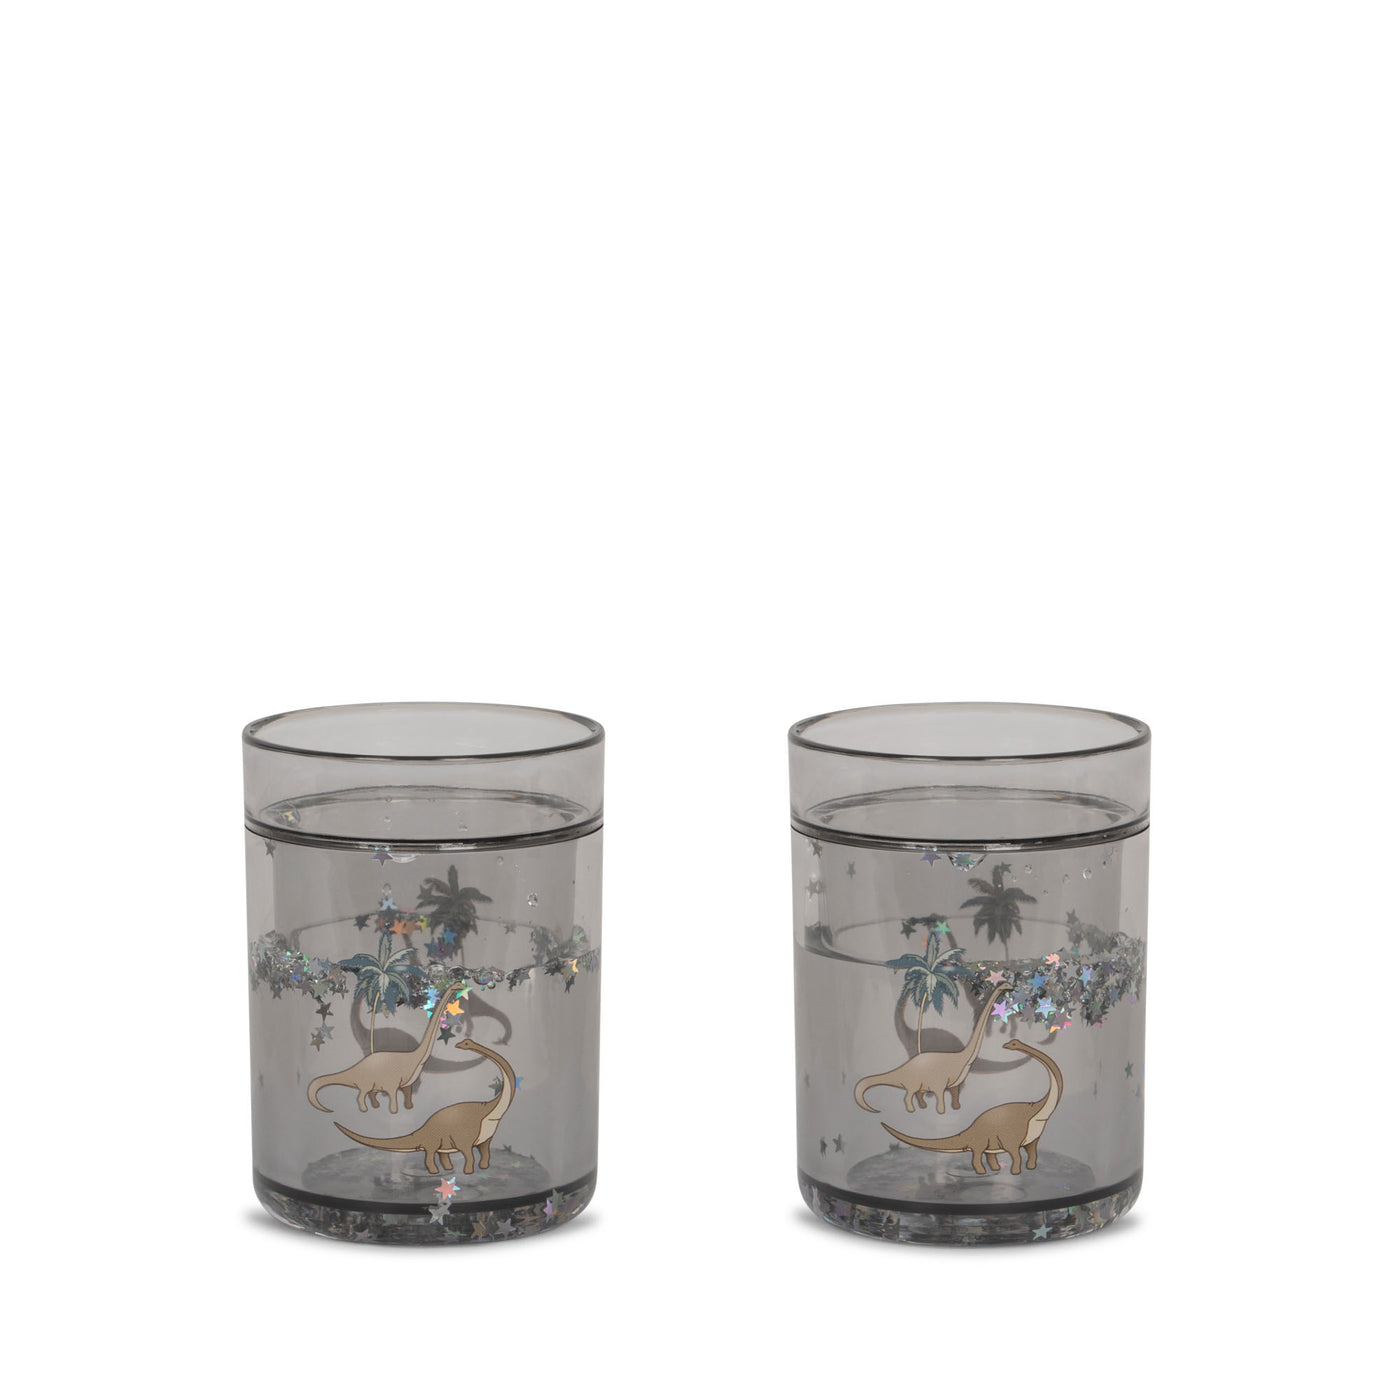 Glitter Cups 2 Pack (KS5069)